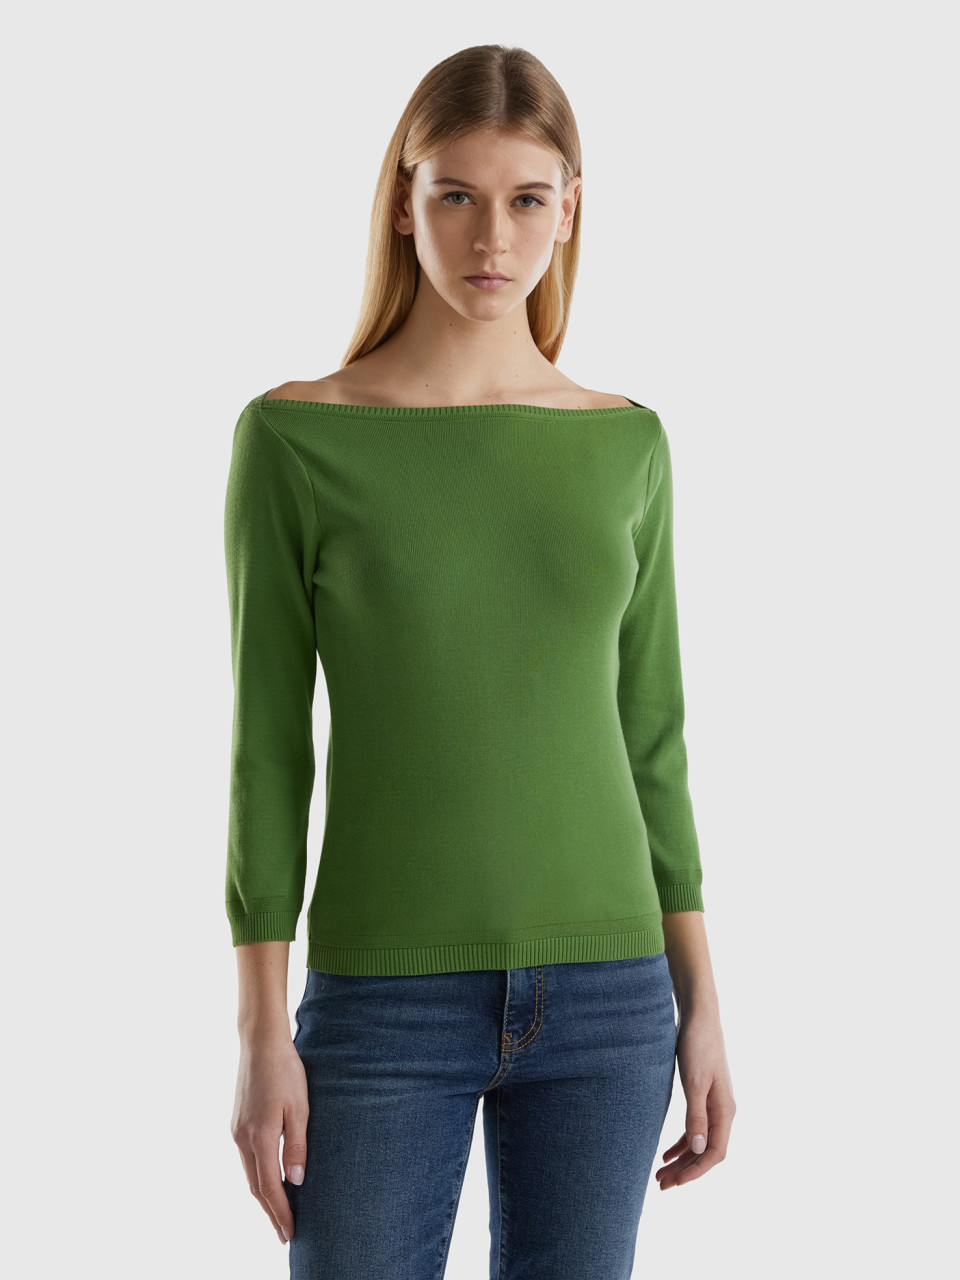 Benetton, 100% Cotton Boat Neck Sweater, Military Green, Women